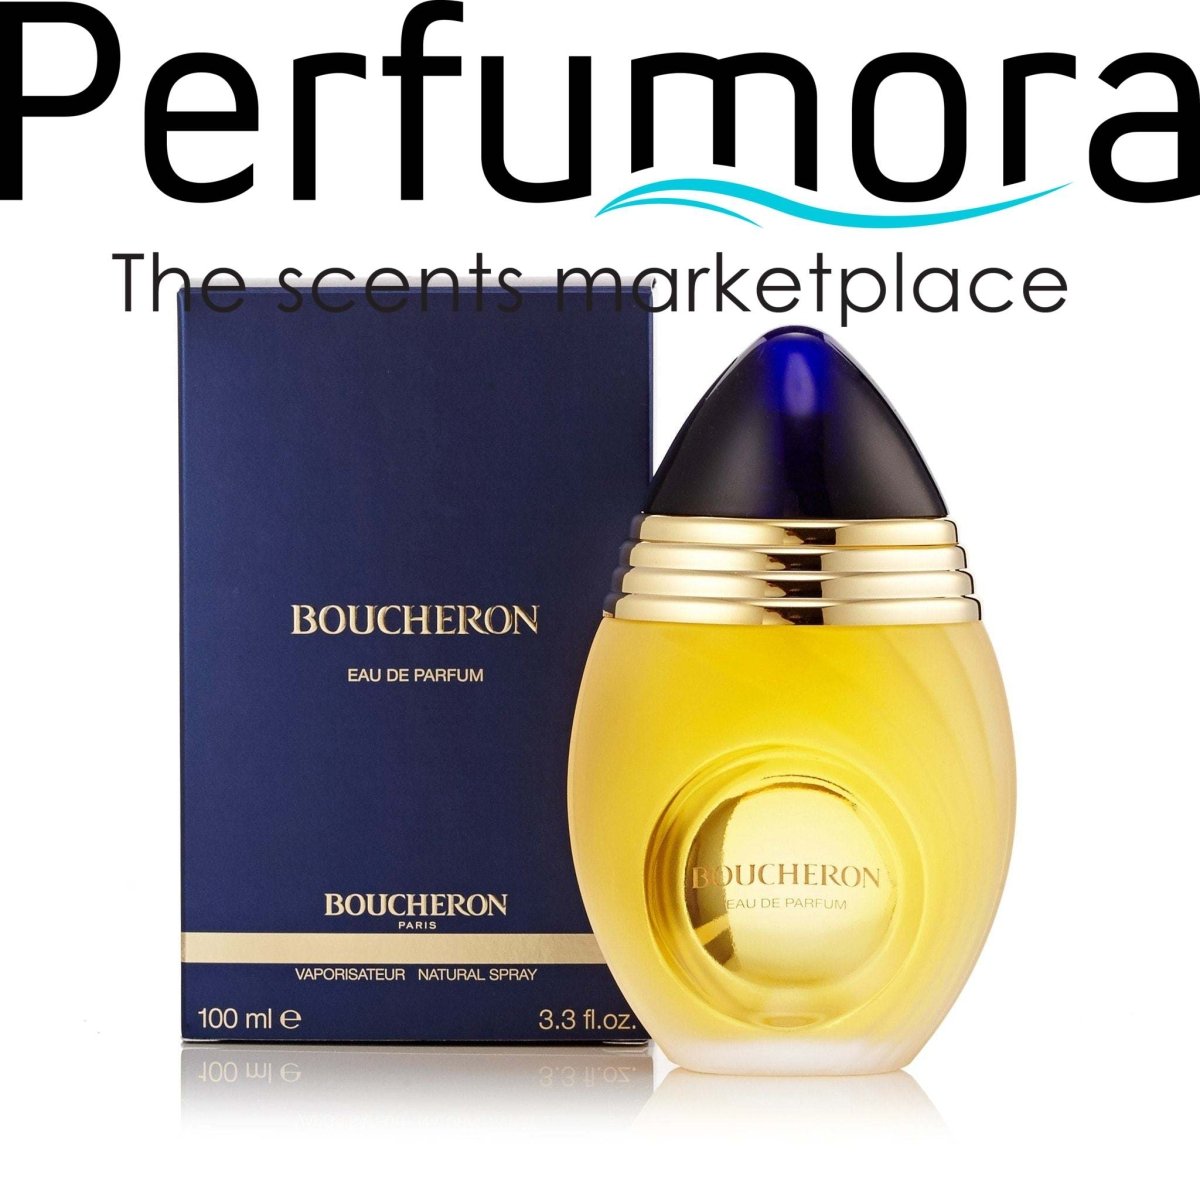 Boucheron Eau de Parfum Spray for Women by Boucheron 3.3 oz.